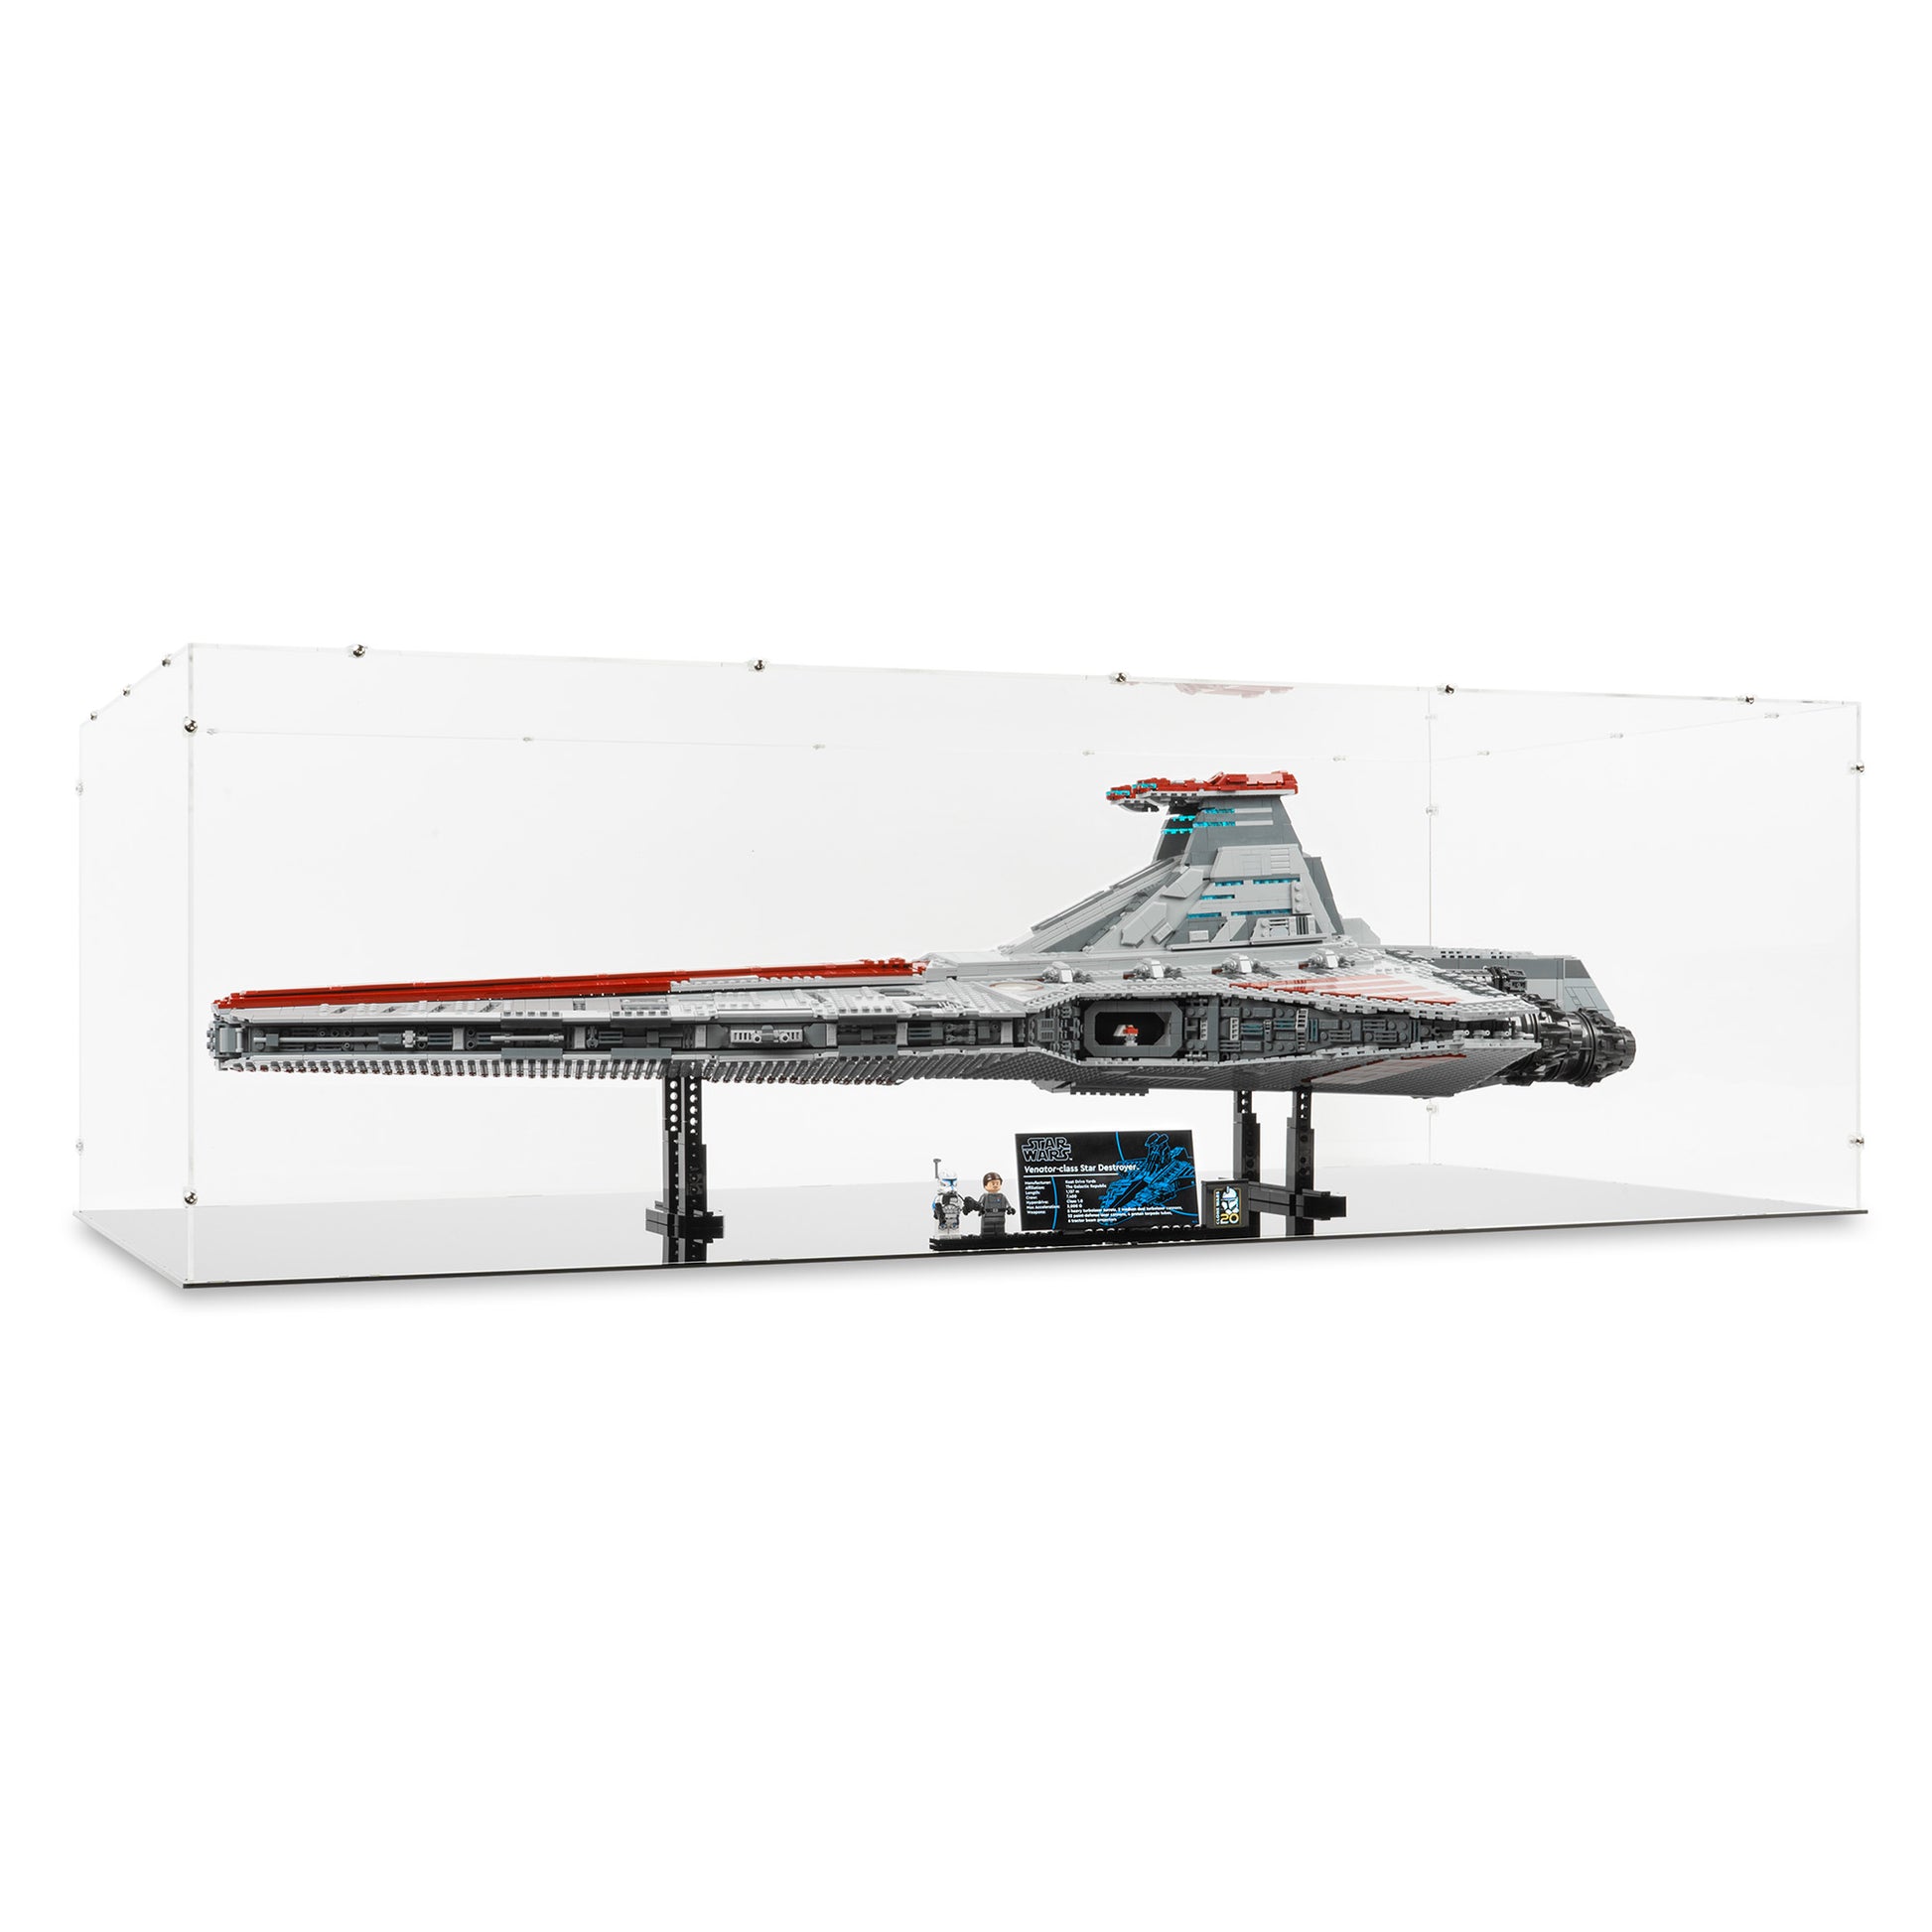 LEGO Star Wars 75367 UCS Venator-Class Republic Attack Cruiser